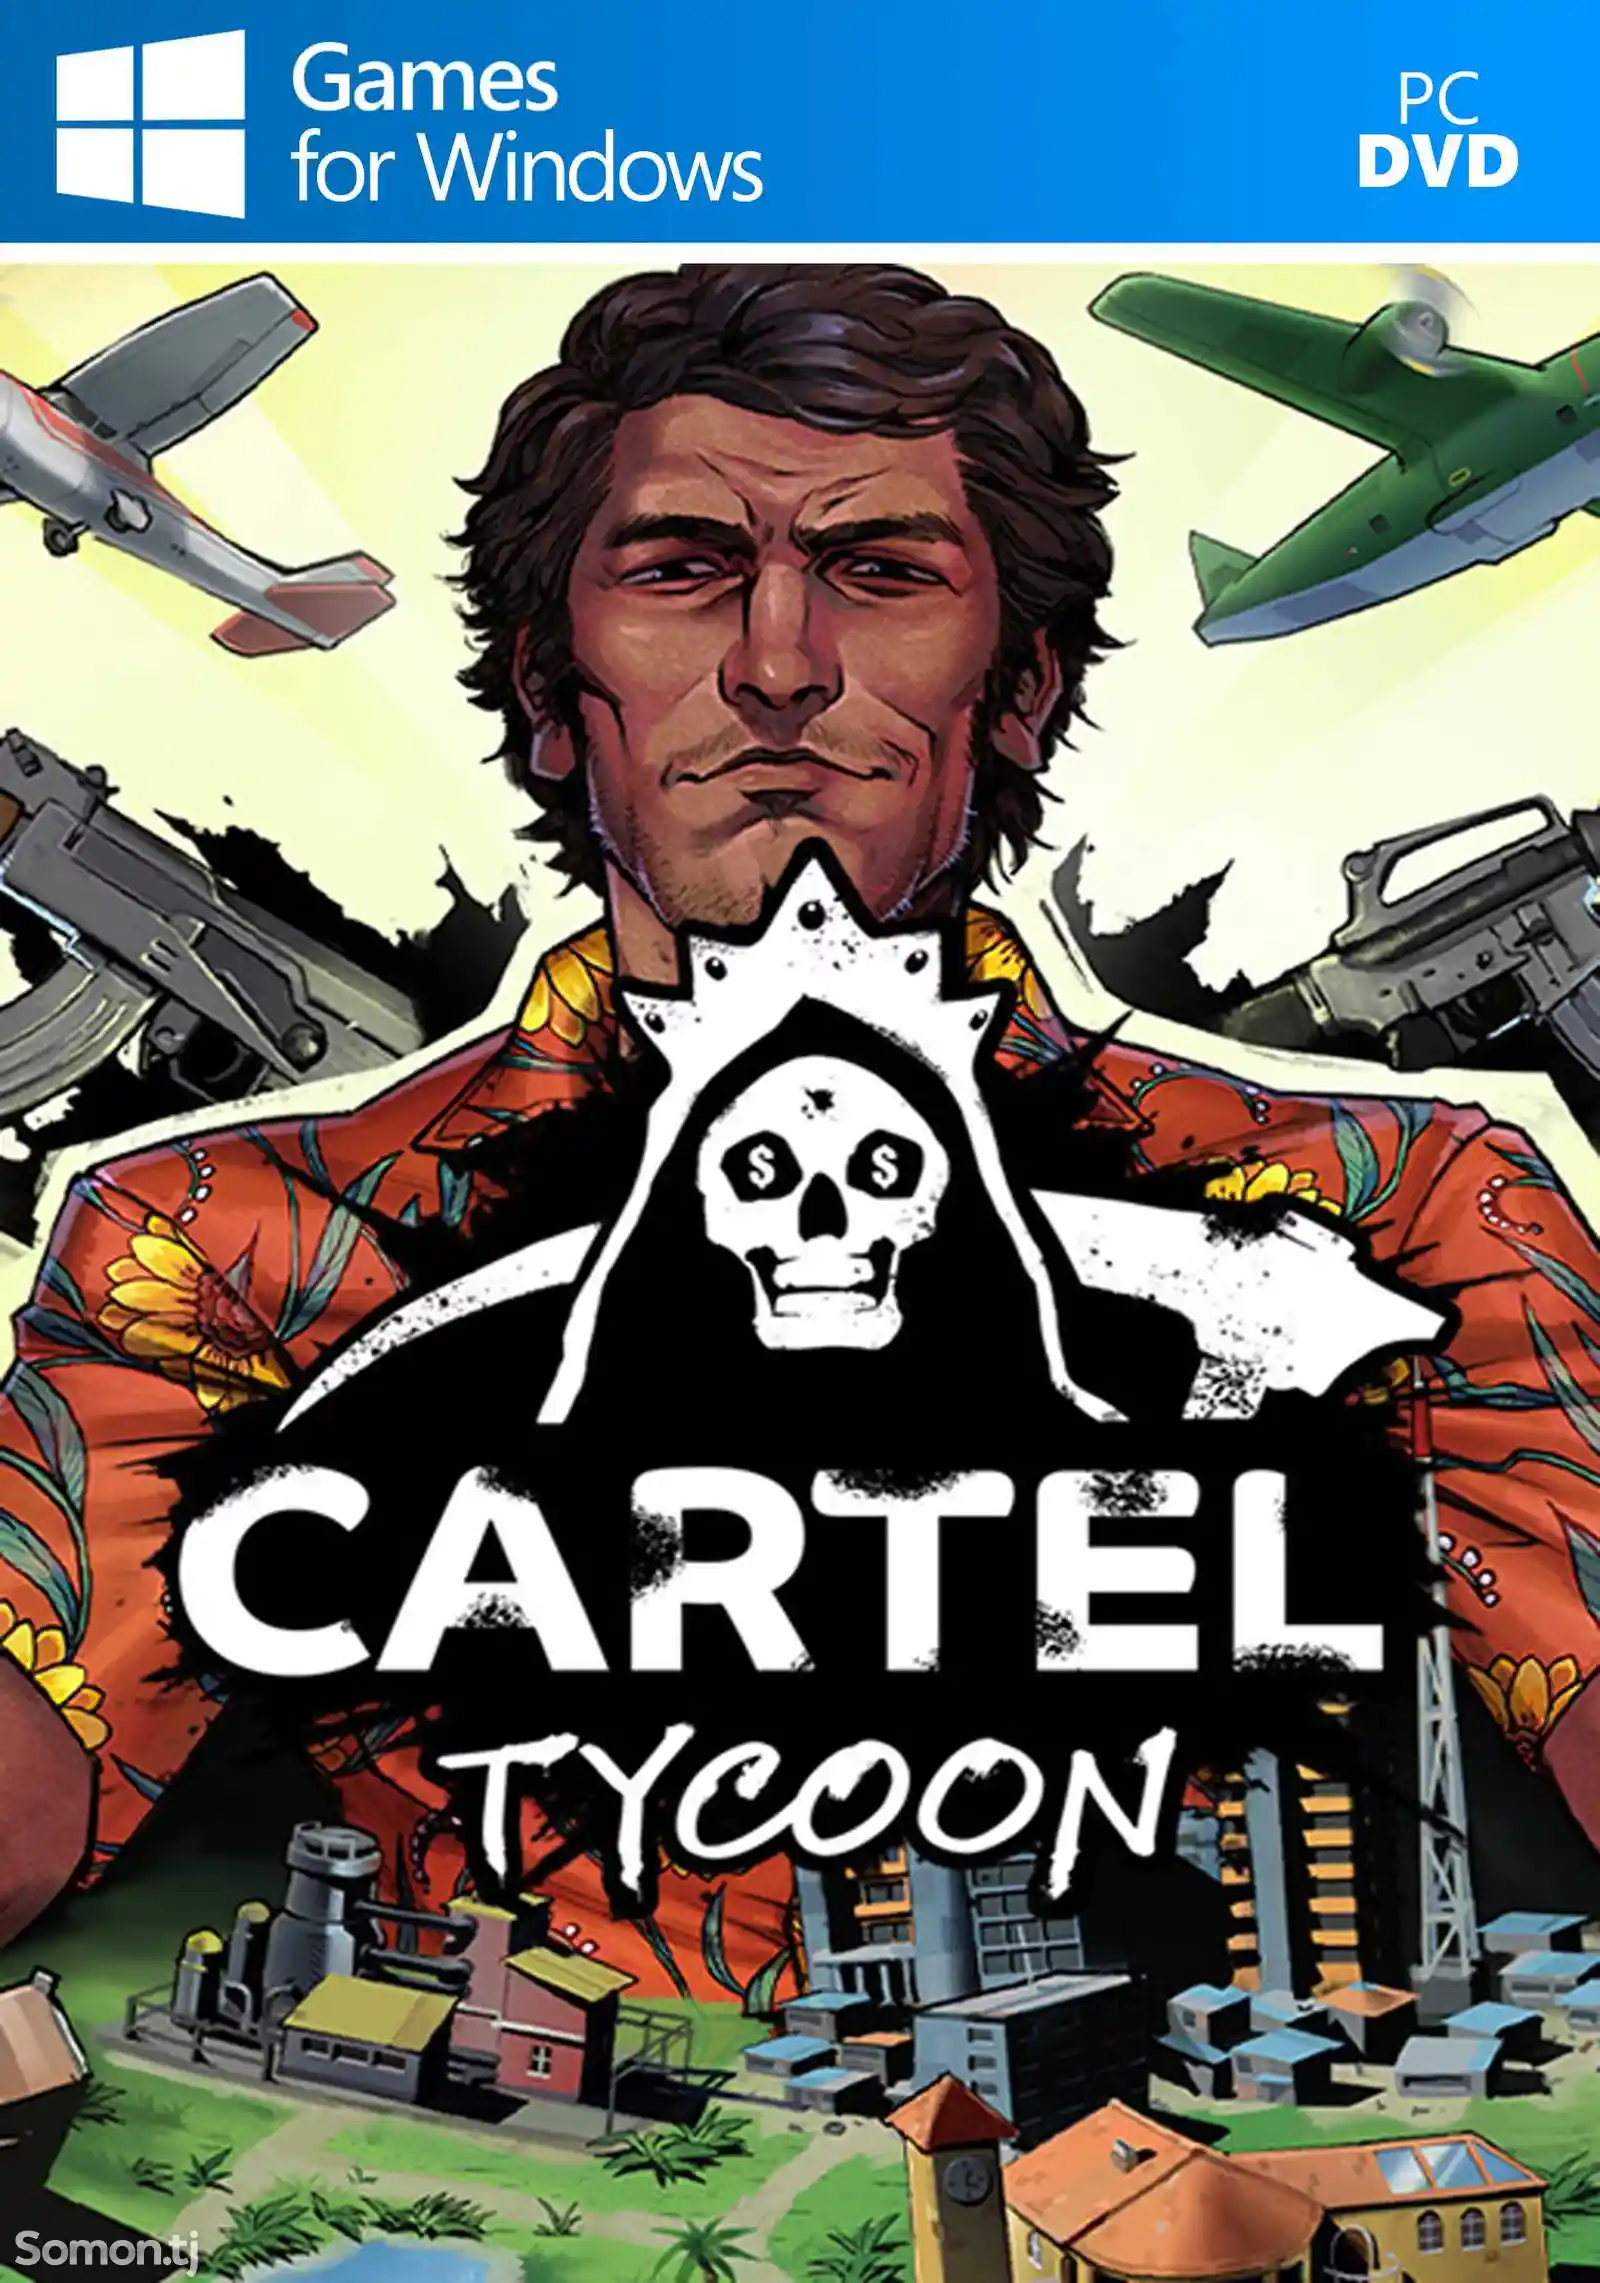 Игра Cartel tycoon для компьютера-пк-pc-1